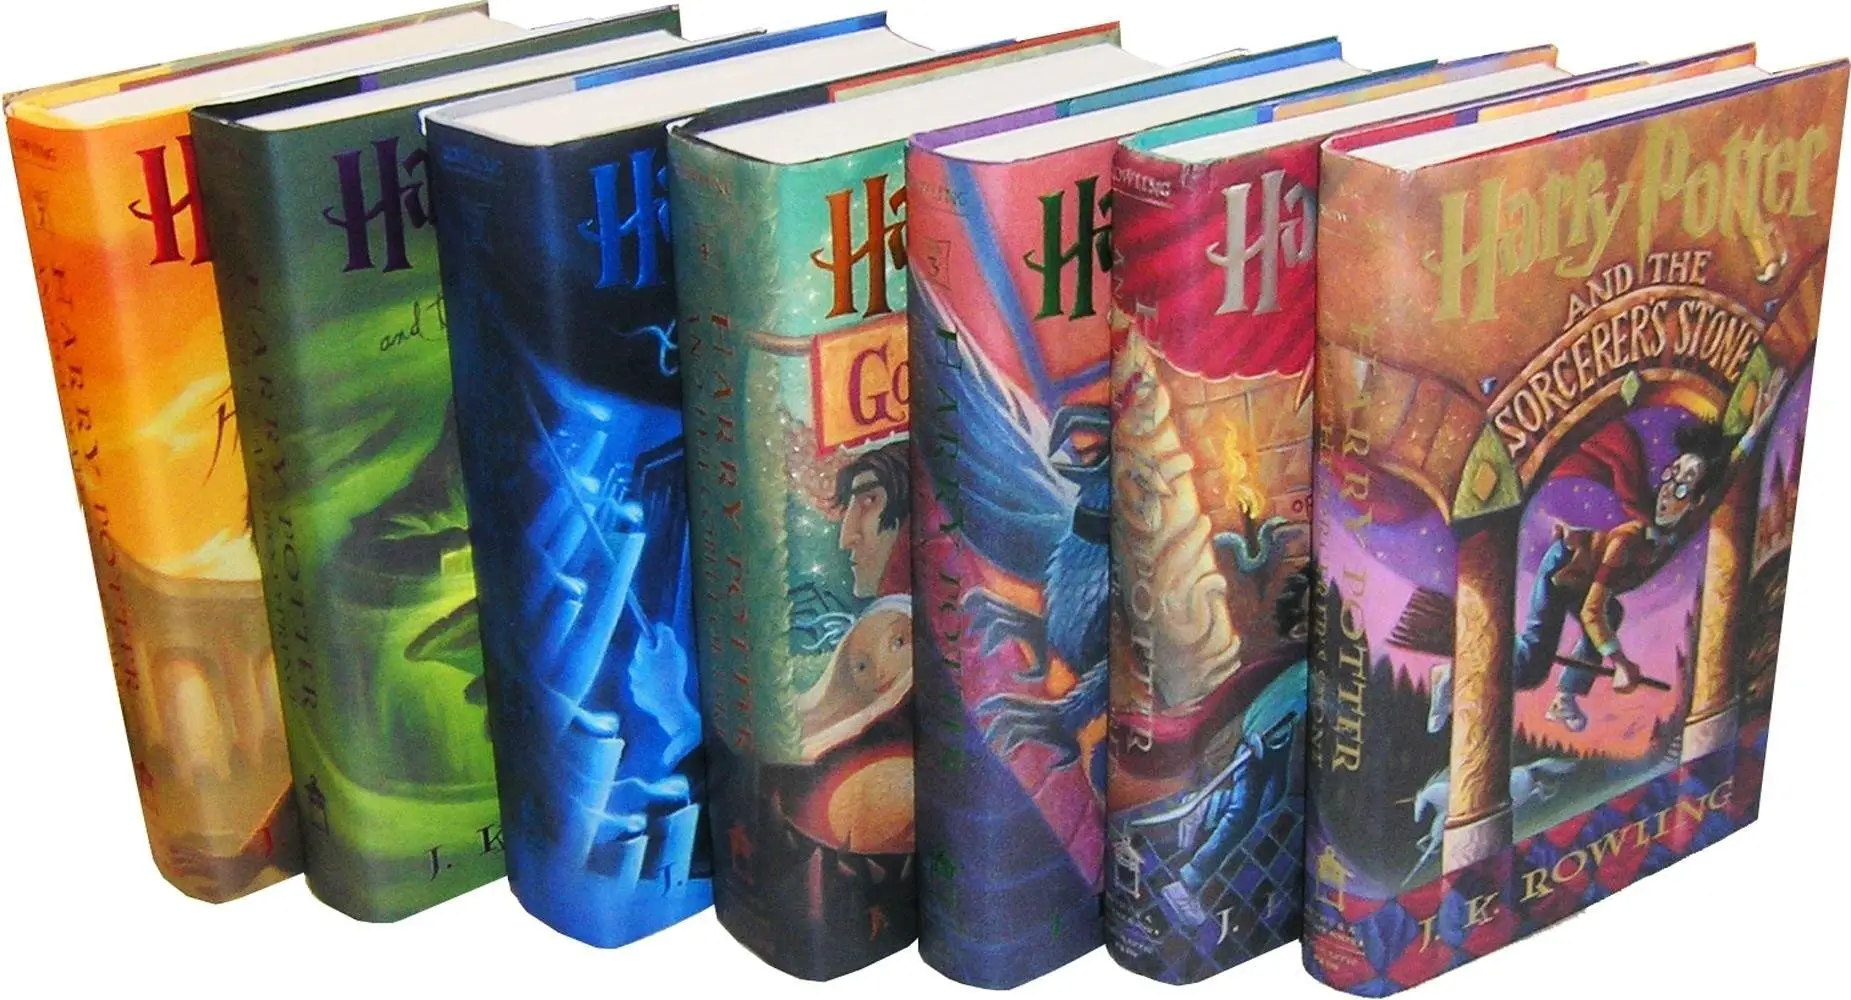 Harry Potter book ban